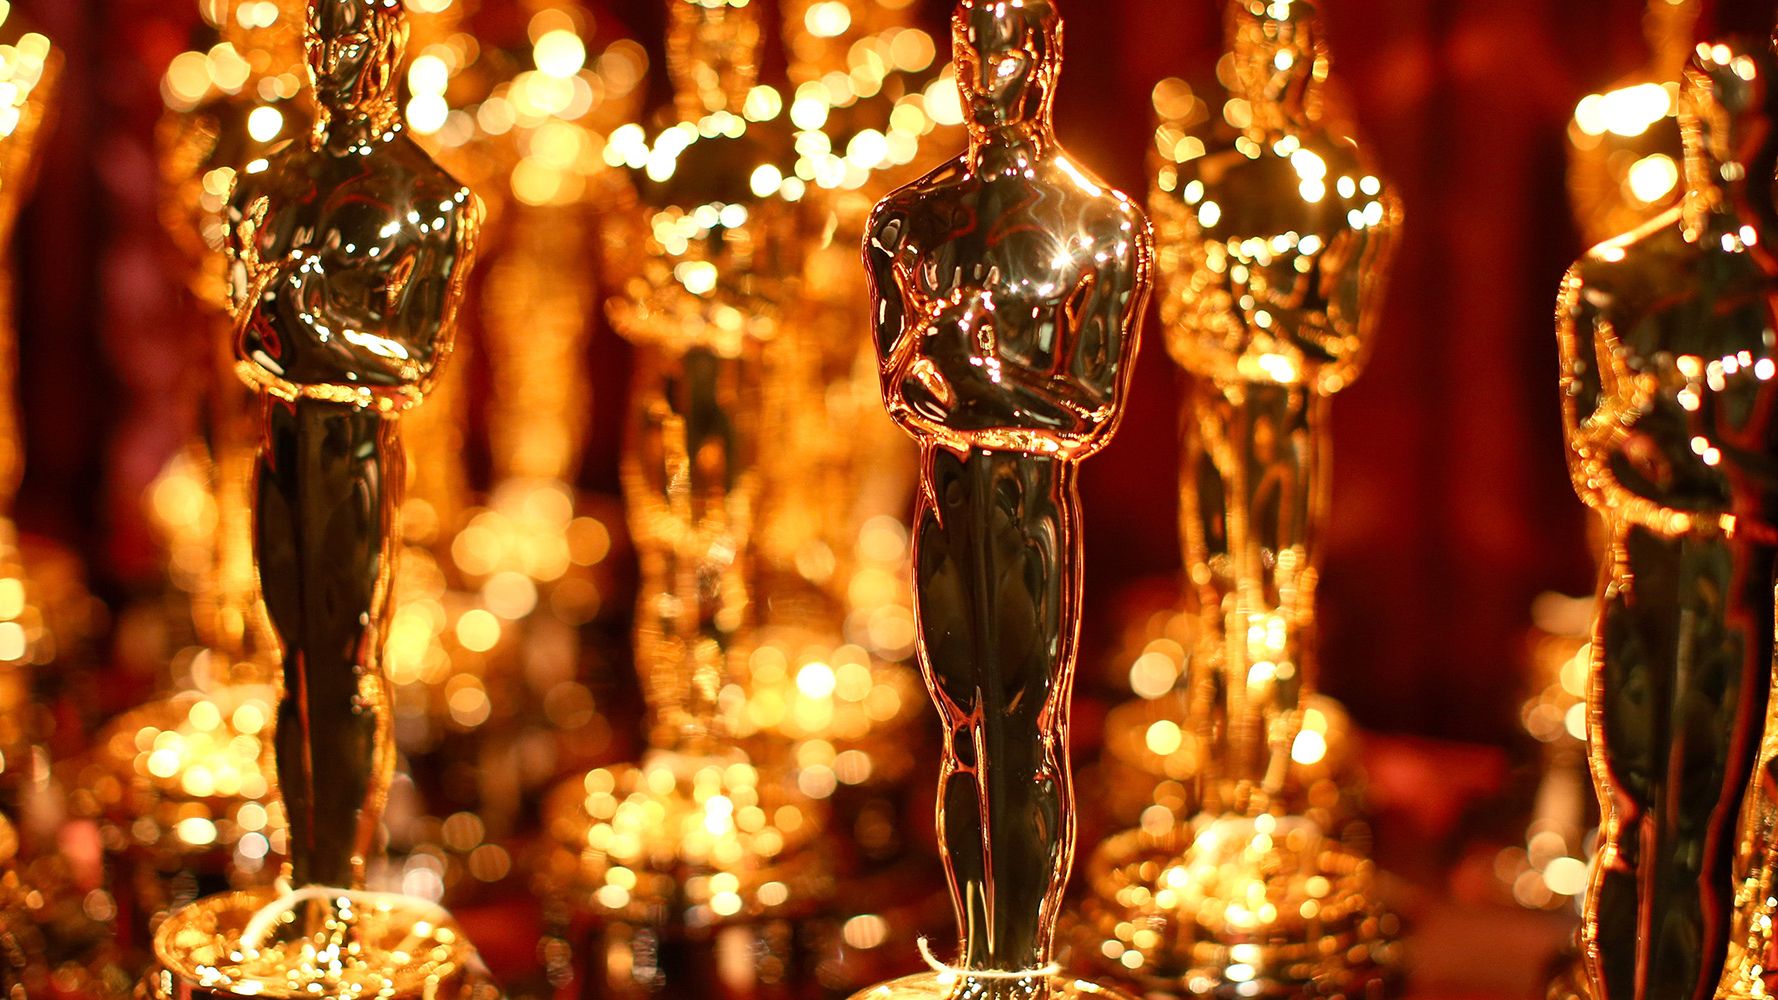 Zoe Saldana Oscars 2023 Dress Sustainable Fashion – The Hollywood